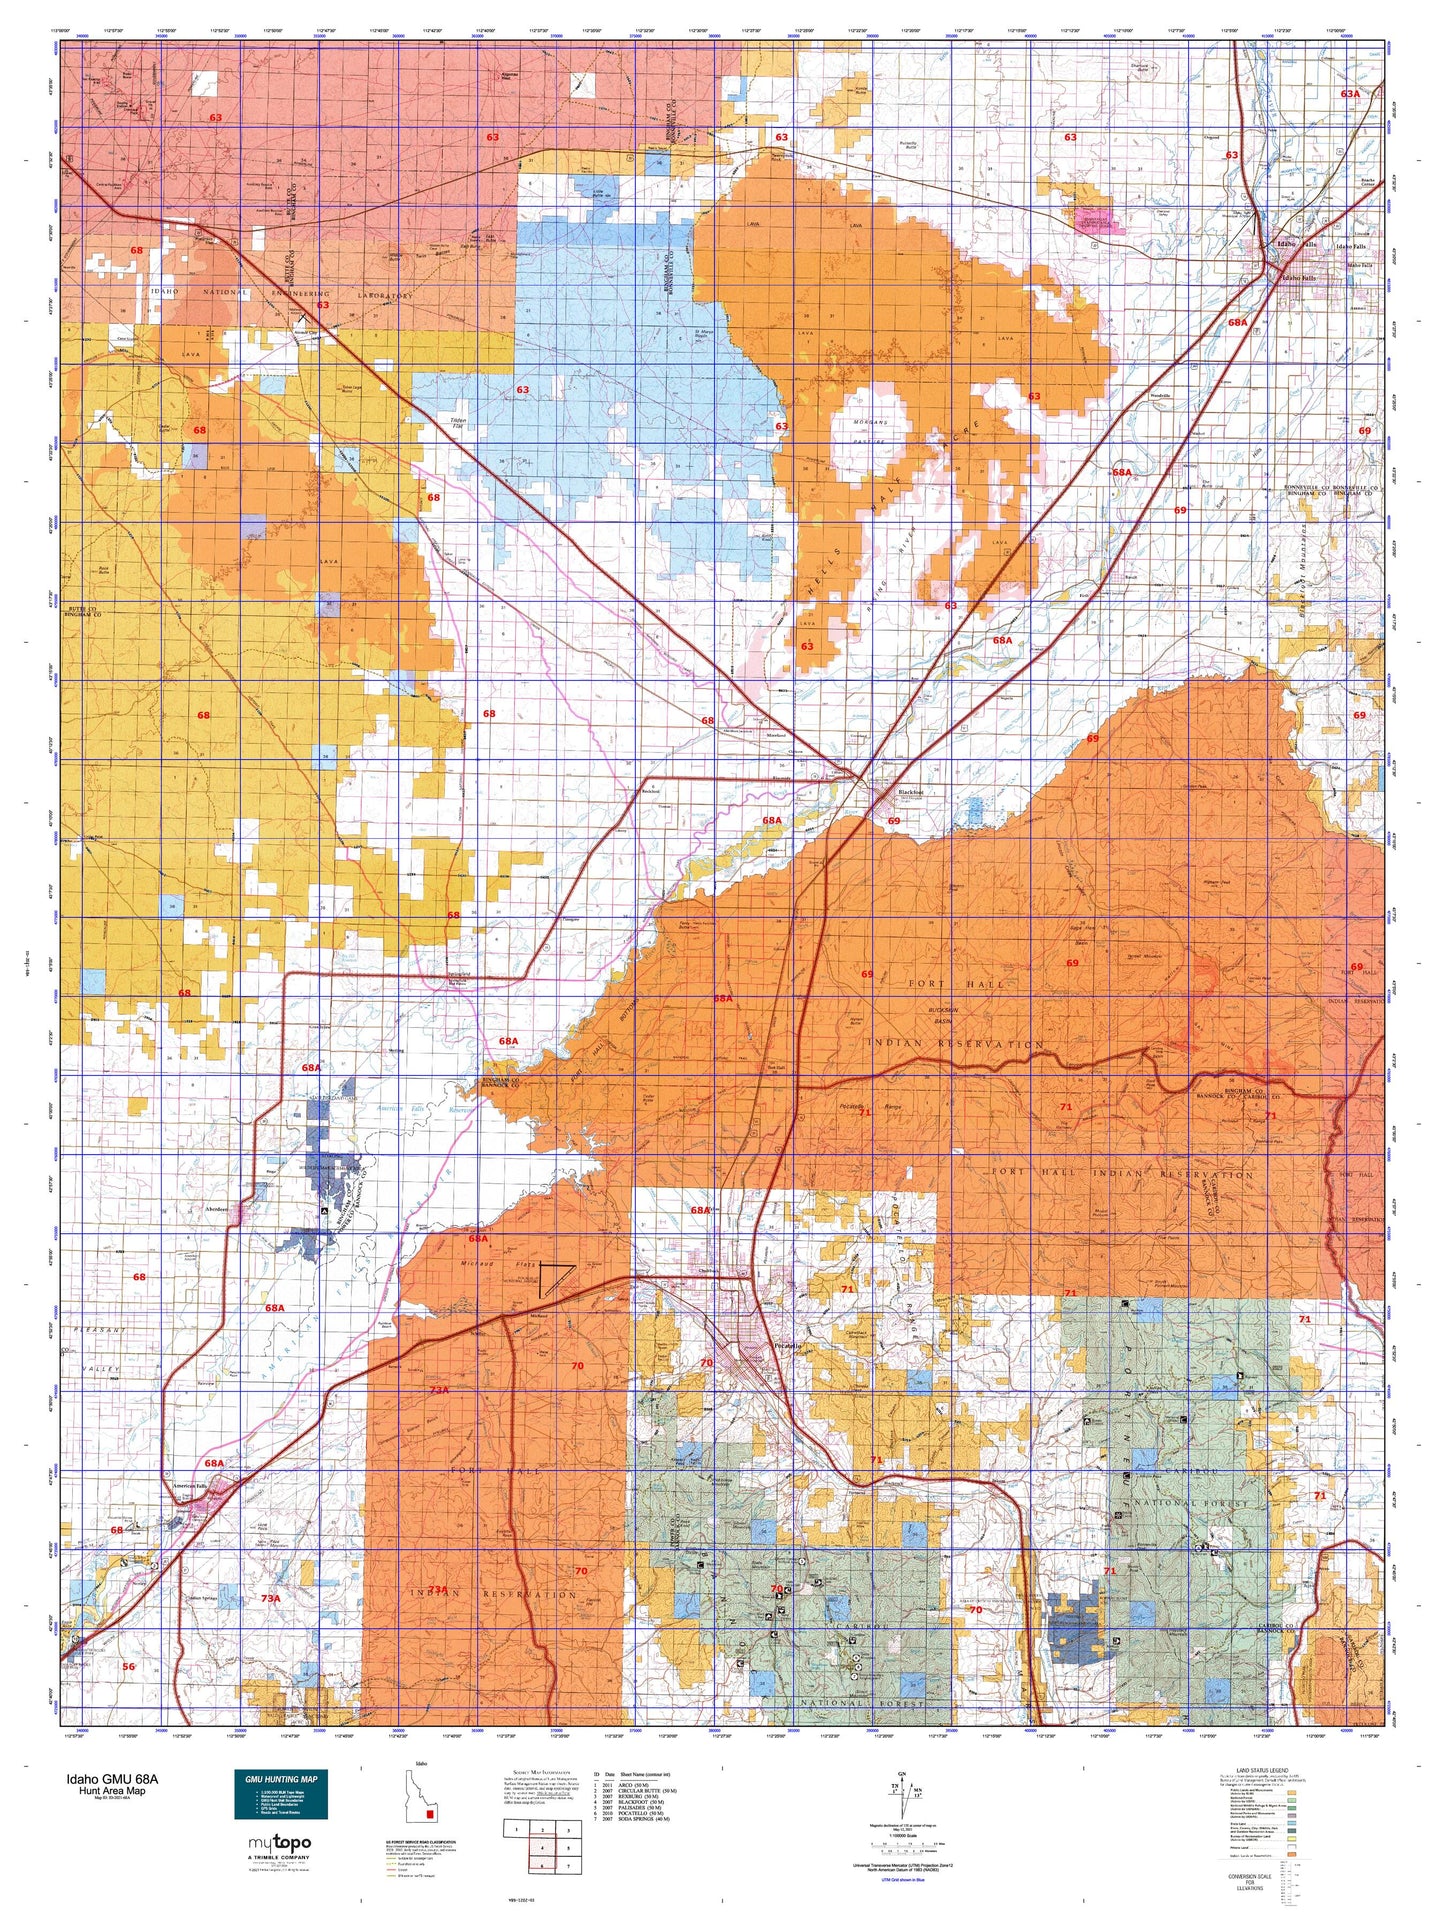 Idaho GMU 68A Map Image